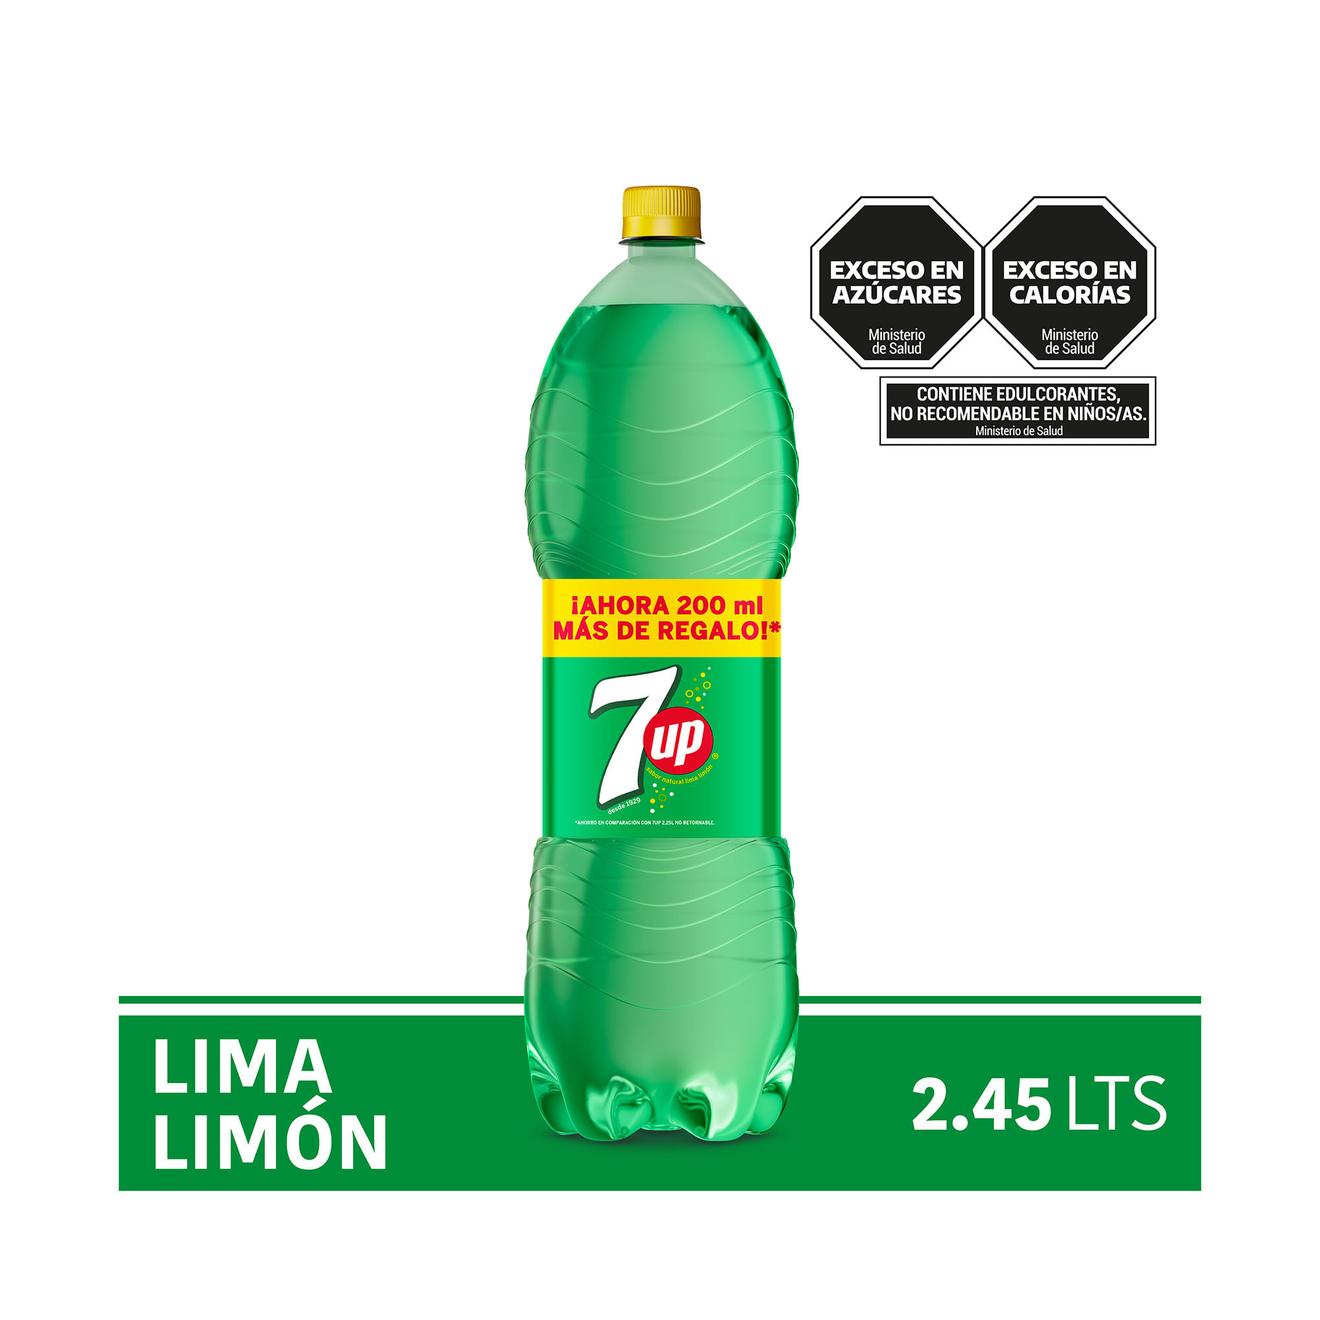 Oferta de Gaseosa lima limón 7 Up regular 2.45 lts. por $2500 en Carrefour